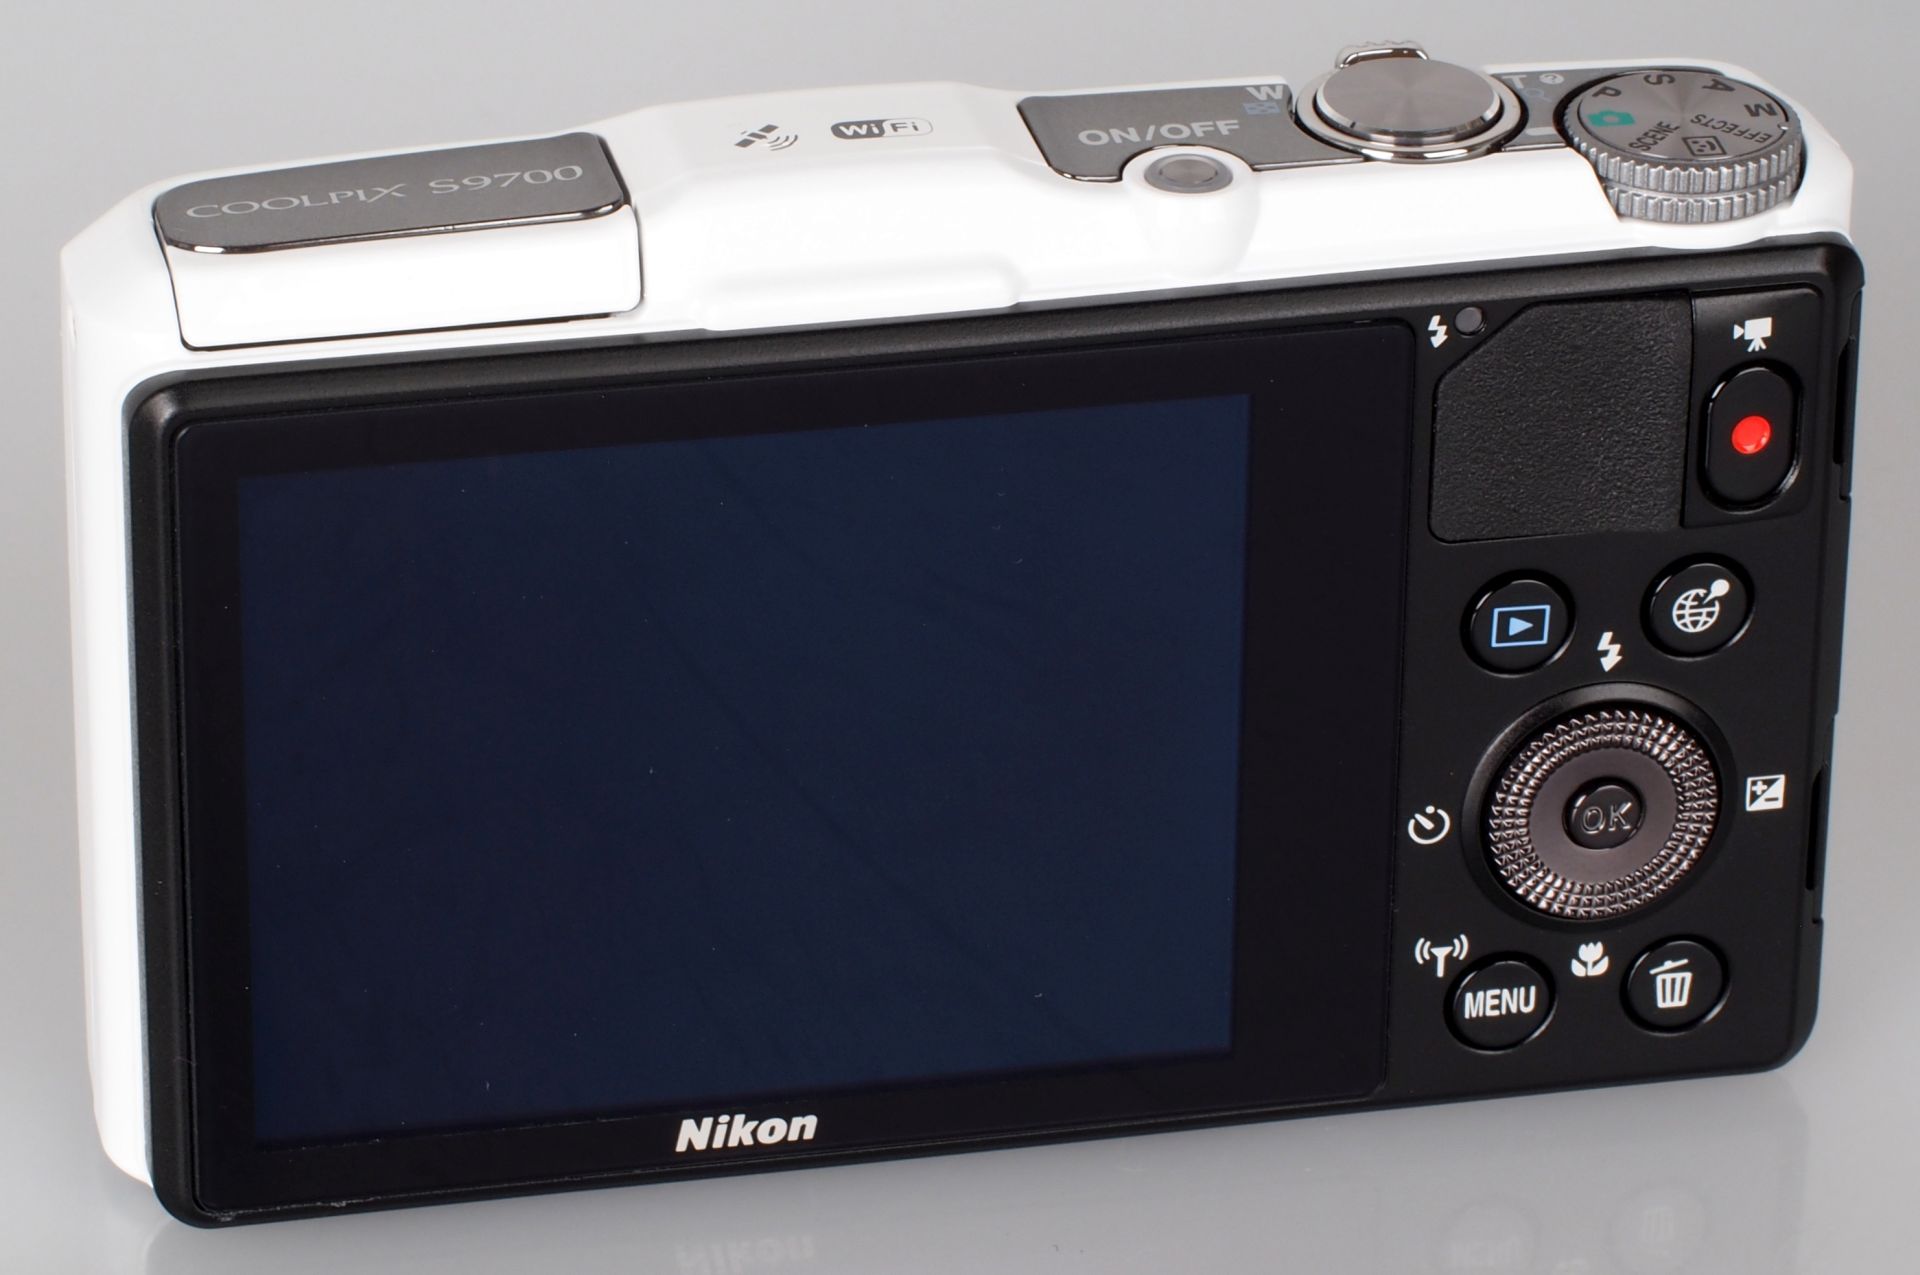 Nikon Updates Firmware For Its New Coolpix S9700 Digital Camera